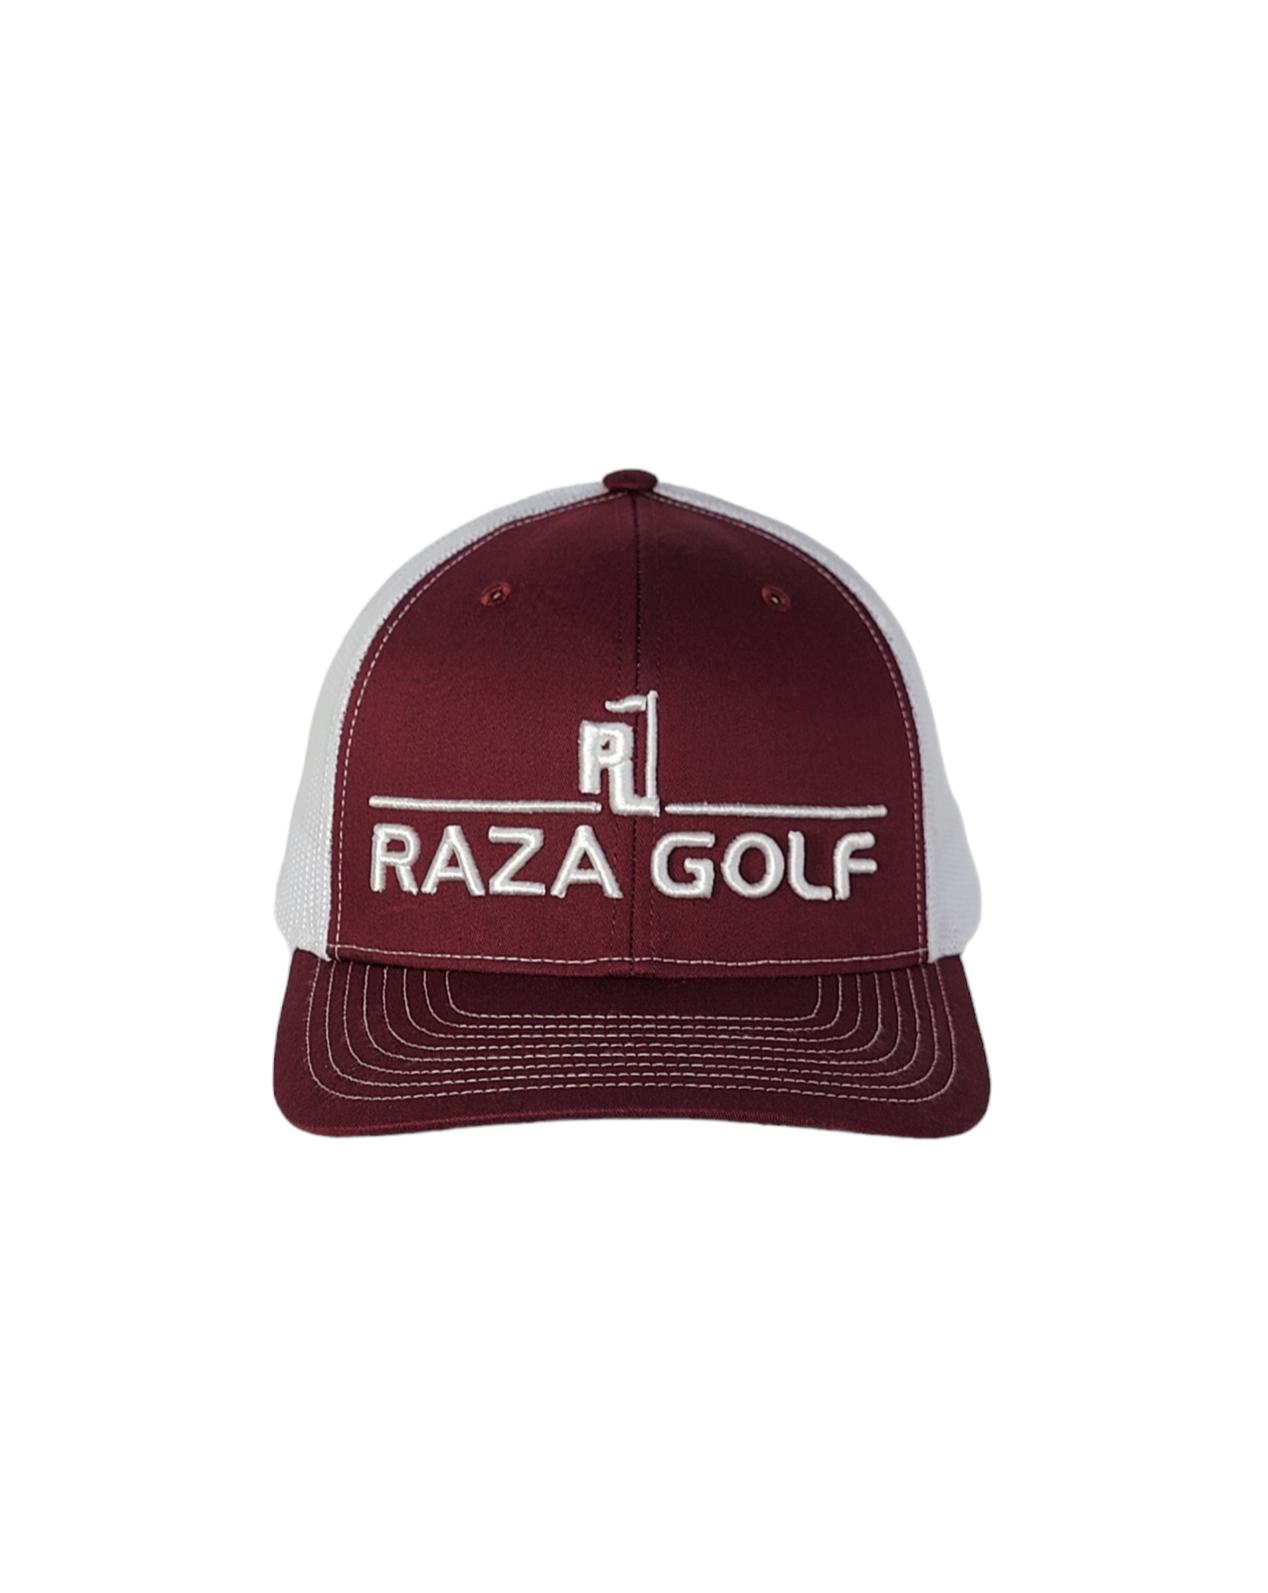 Raza Golf Maroon/White Linear Trucker Hat